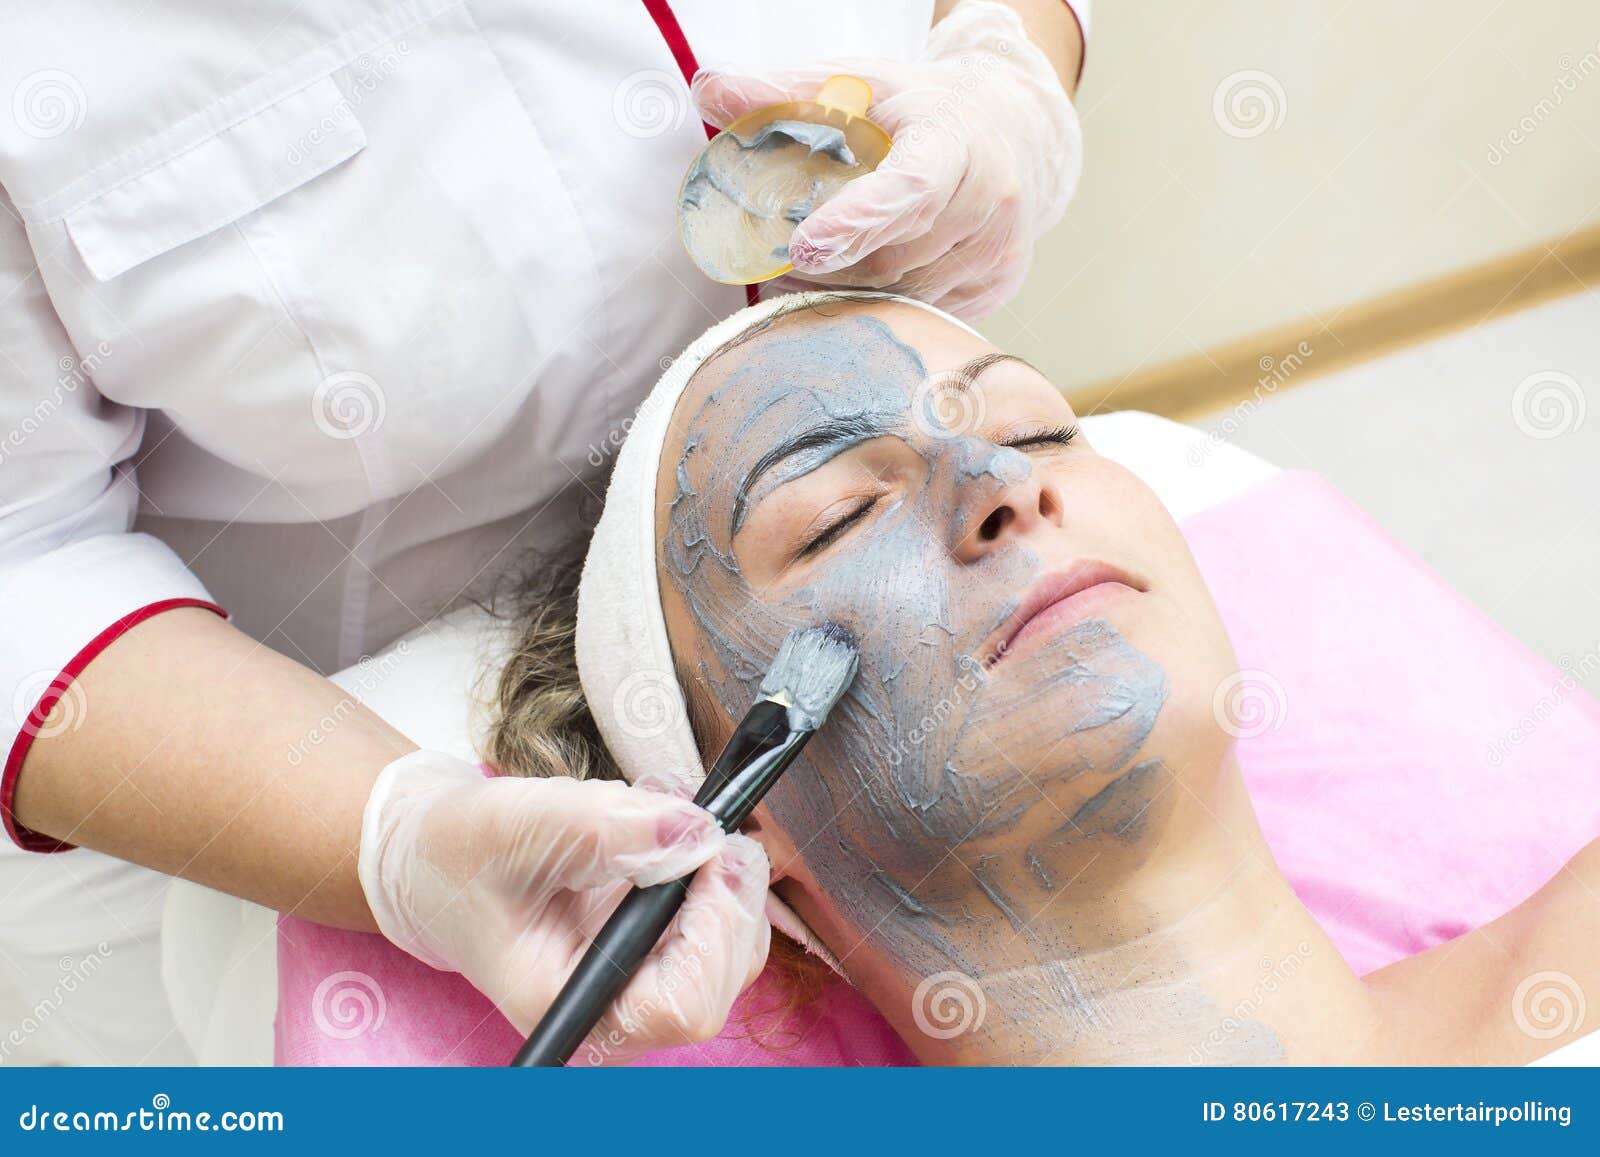 Process Of Massage And Facials Stock Image Image Of Natural Healing